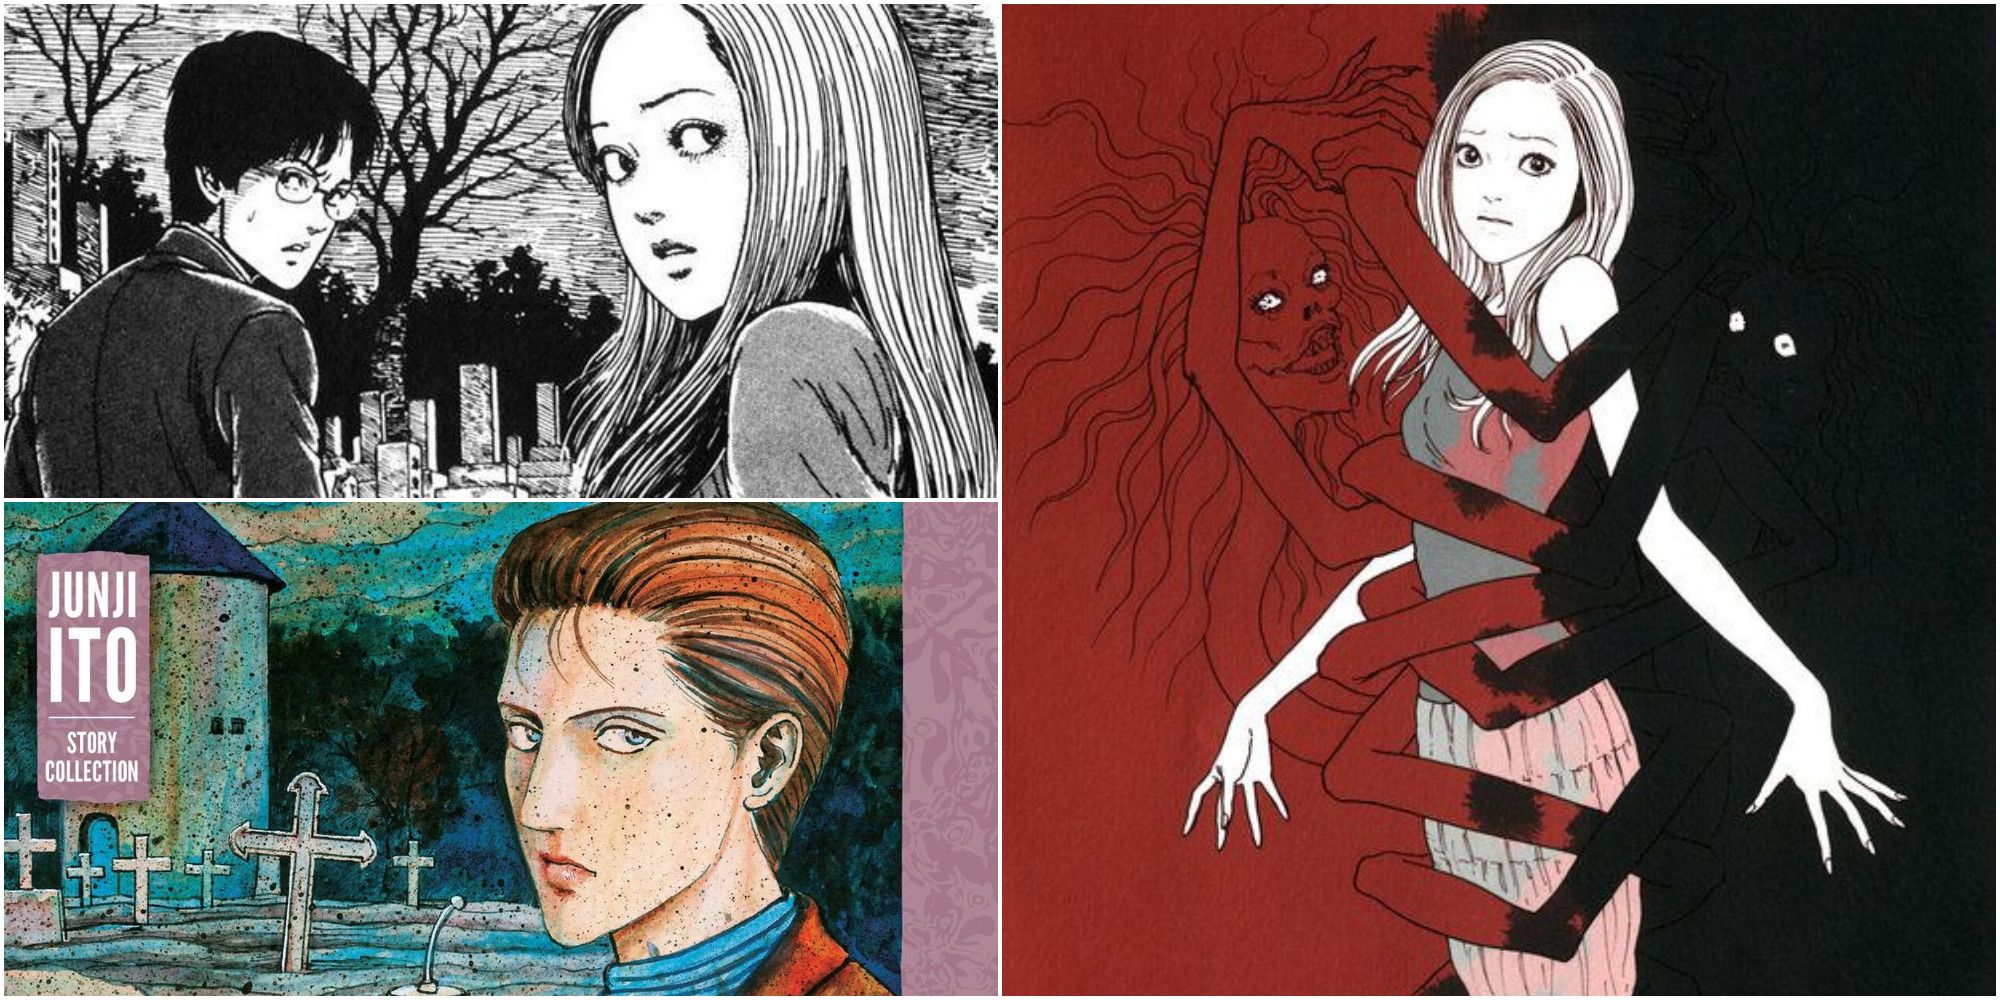 10 Weird Sci-Fi Or Horror Manga Series For Fans Of Hellstar Remina